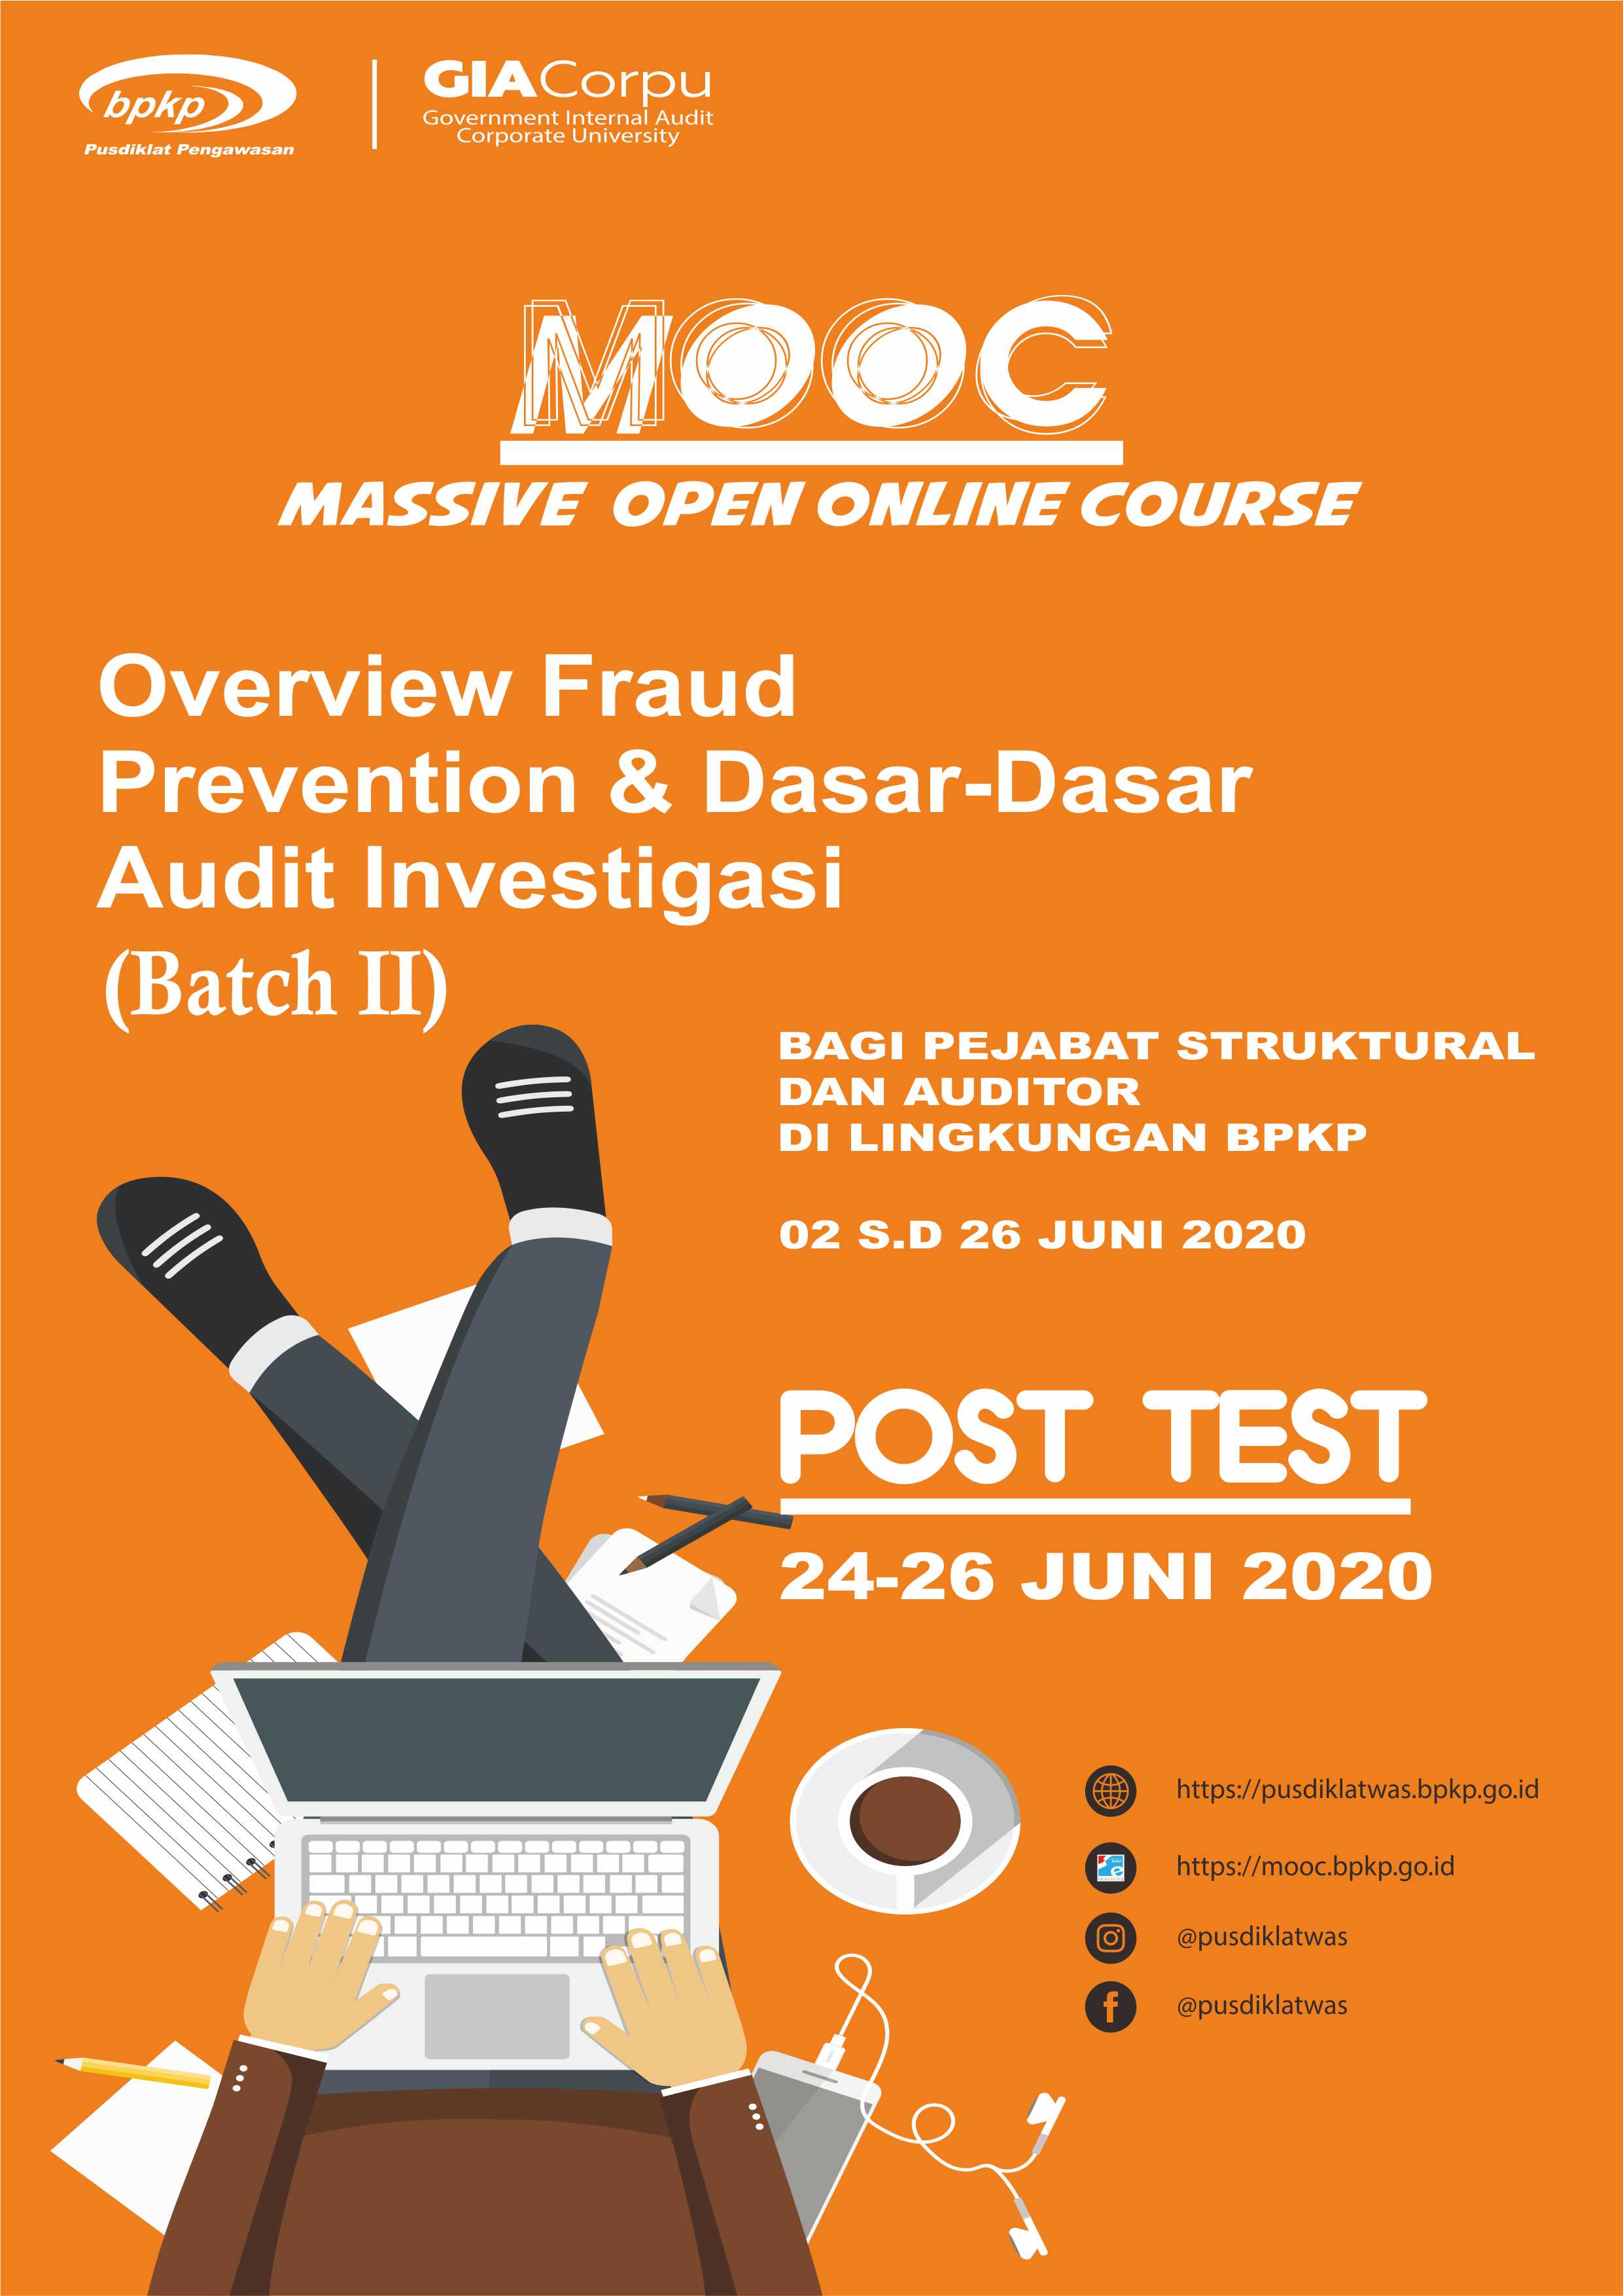 Overview Fraud Prevention & Dasar-Dasar Audit Investigasi (Batch II)